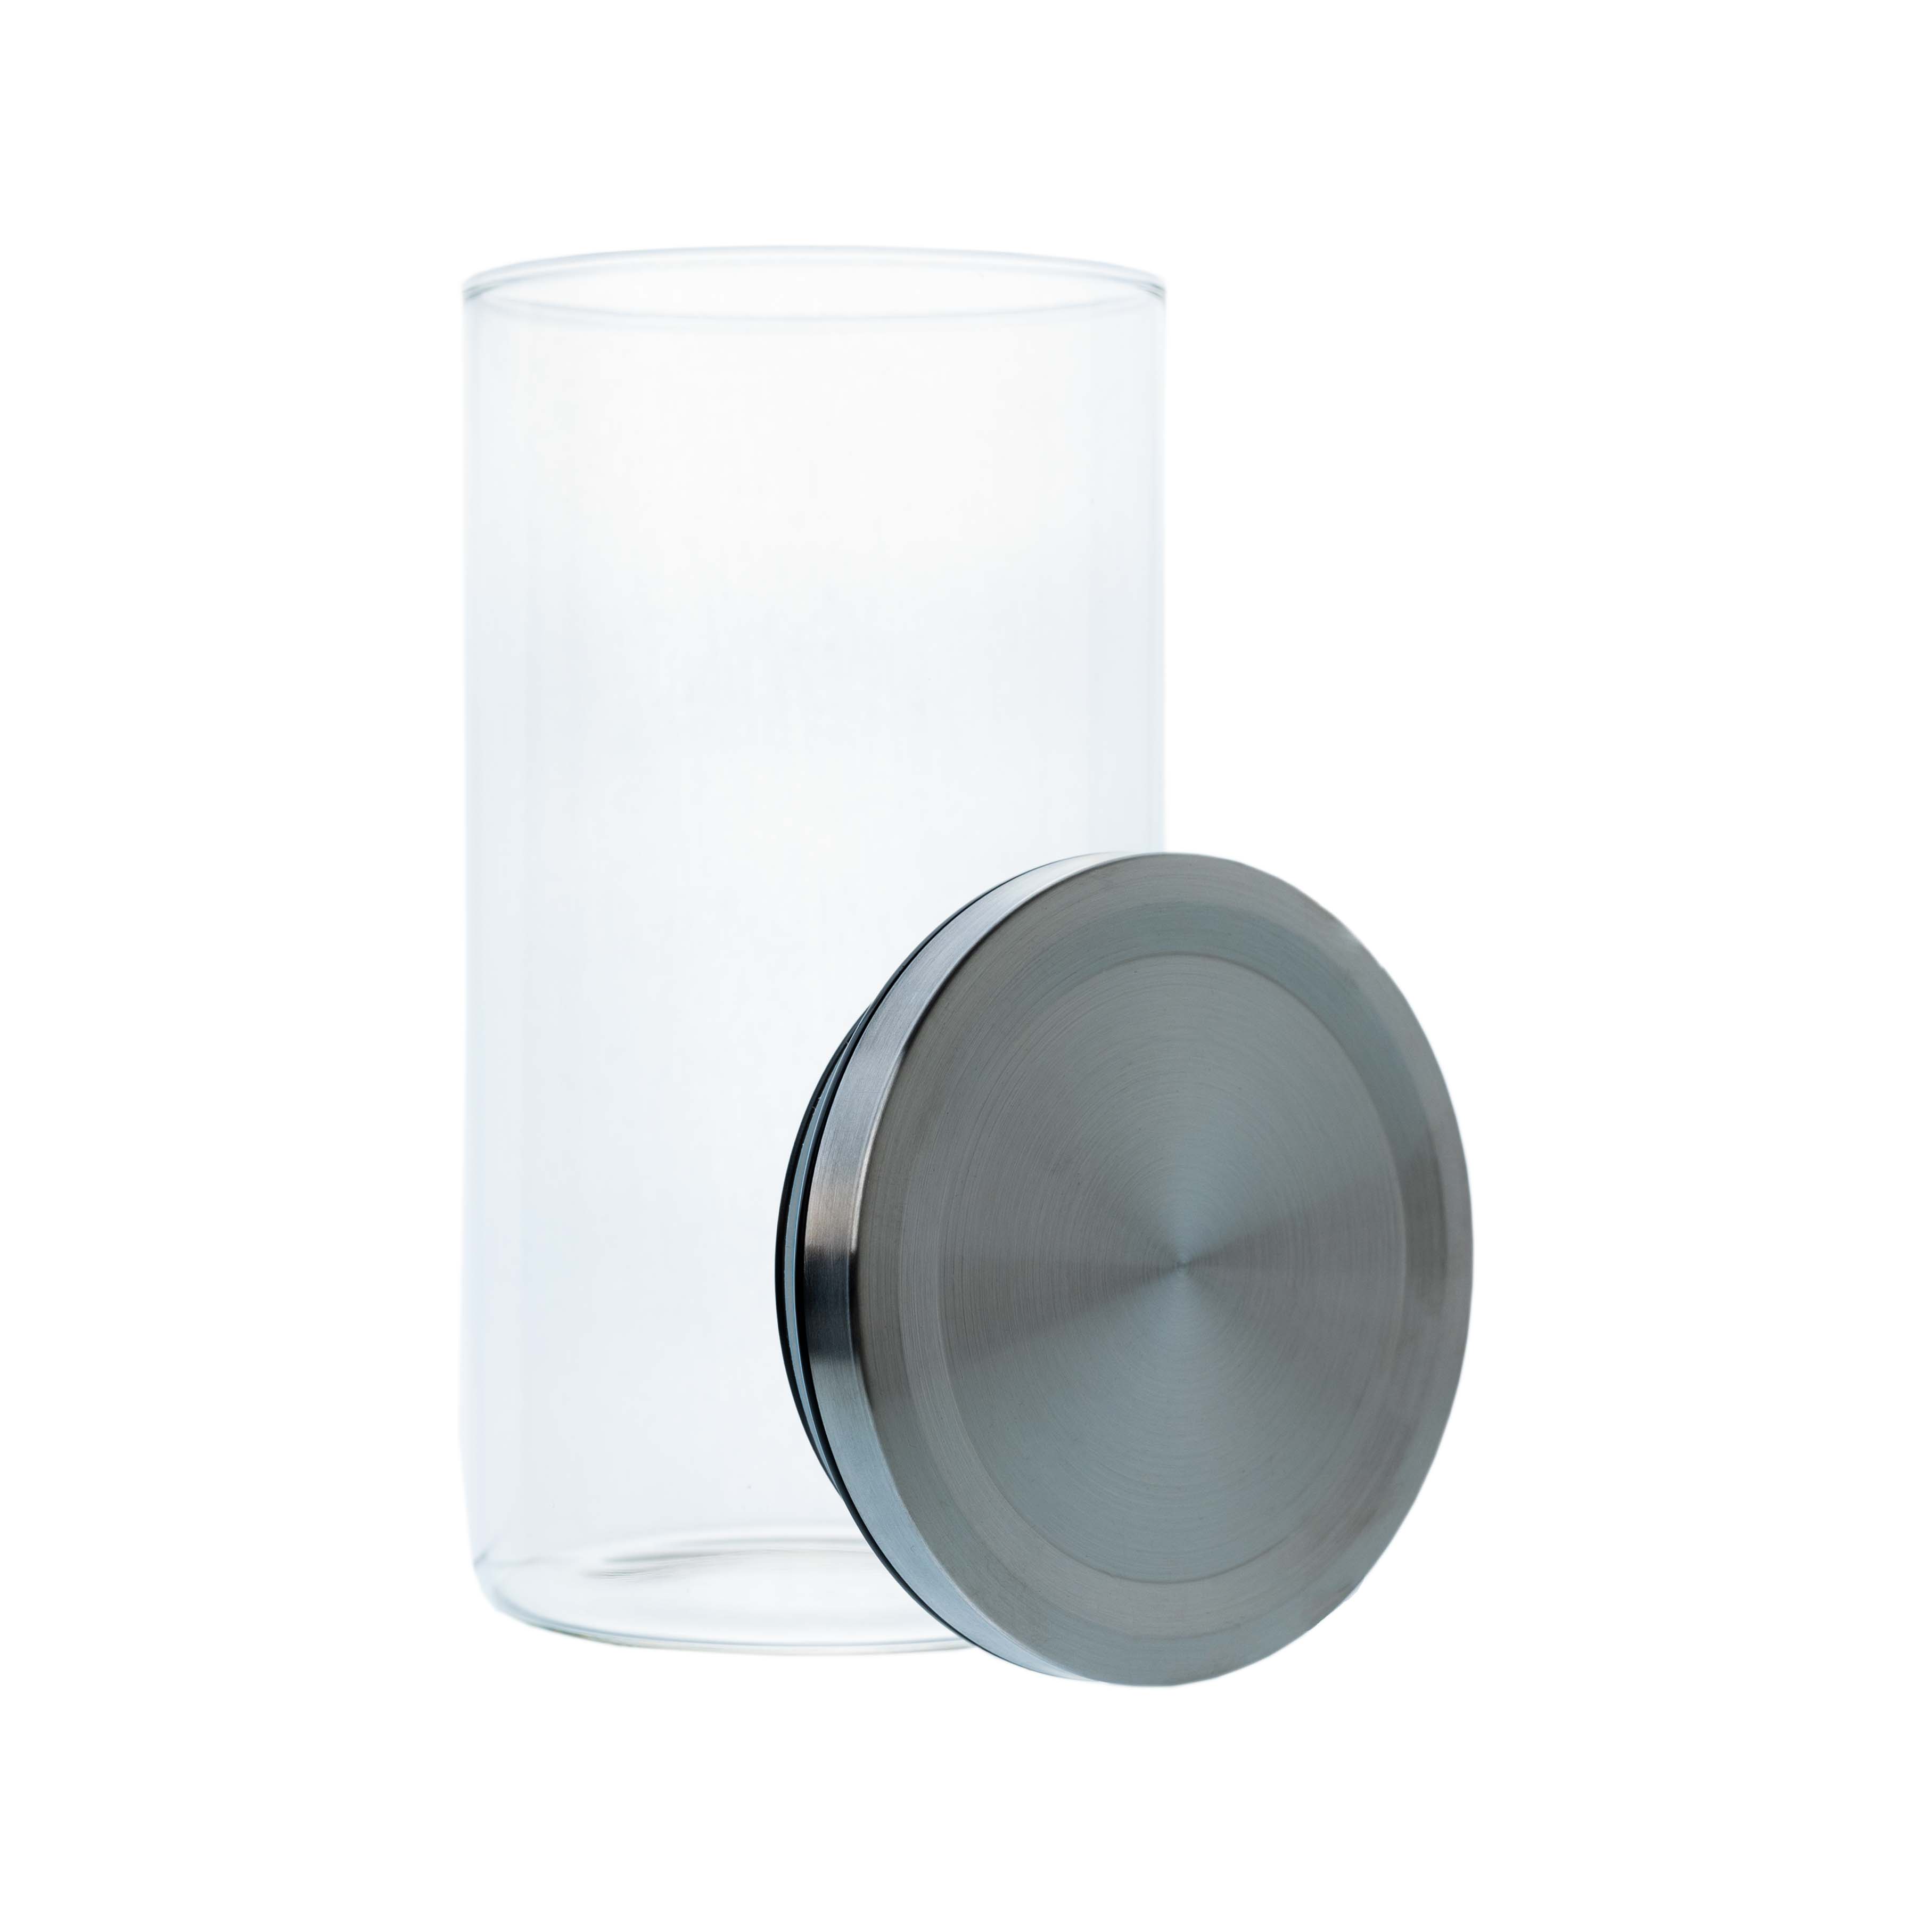 Borosilikatglas - Vorratsglas 1100 ml mit Edelstahldeckel